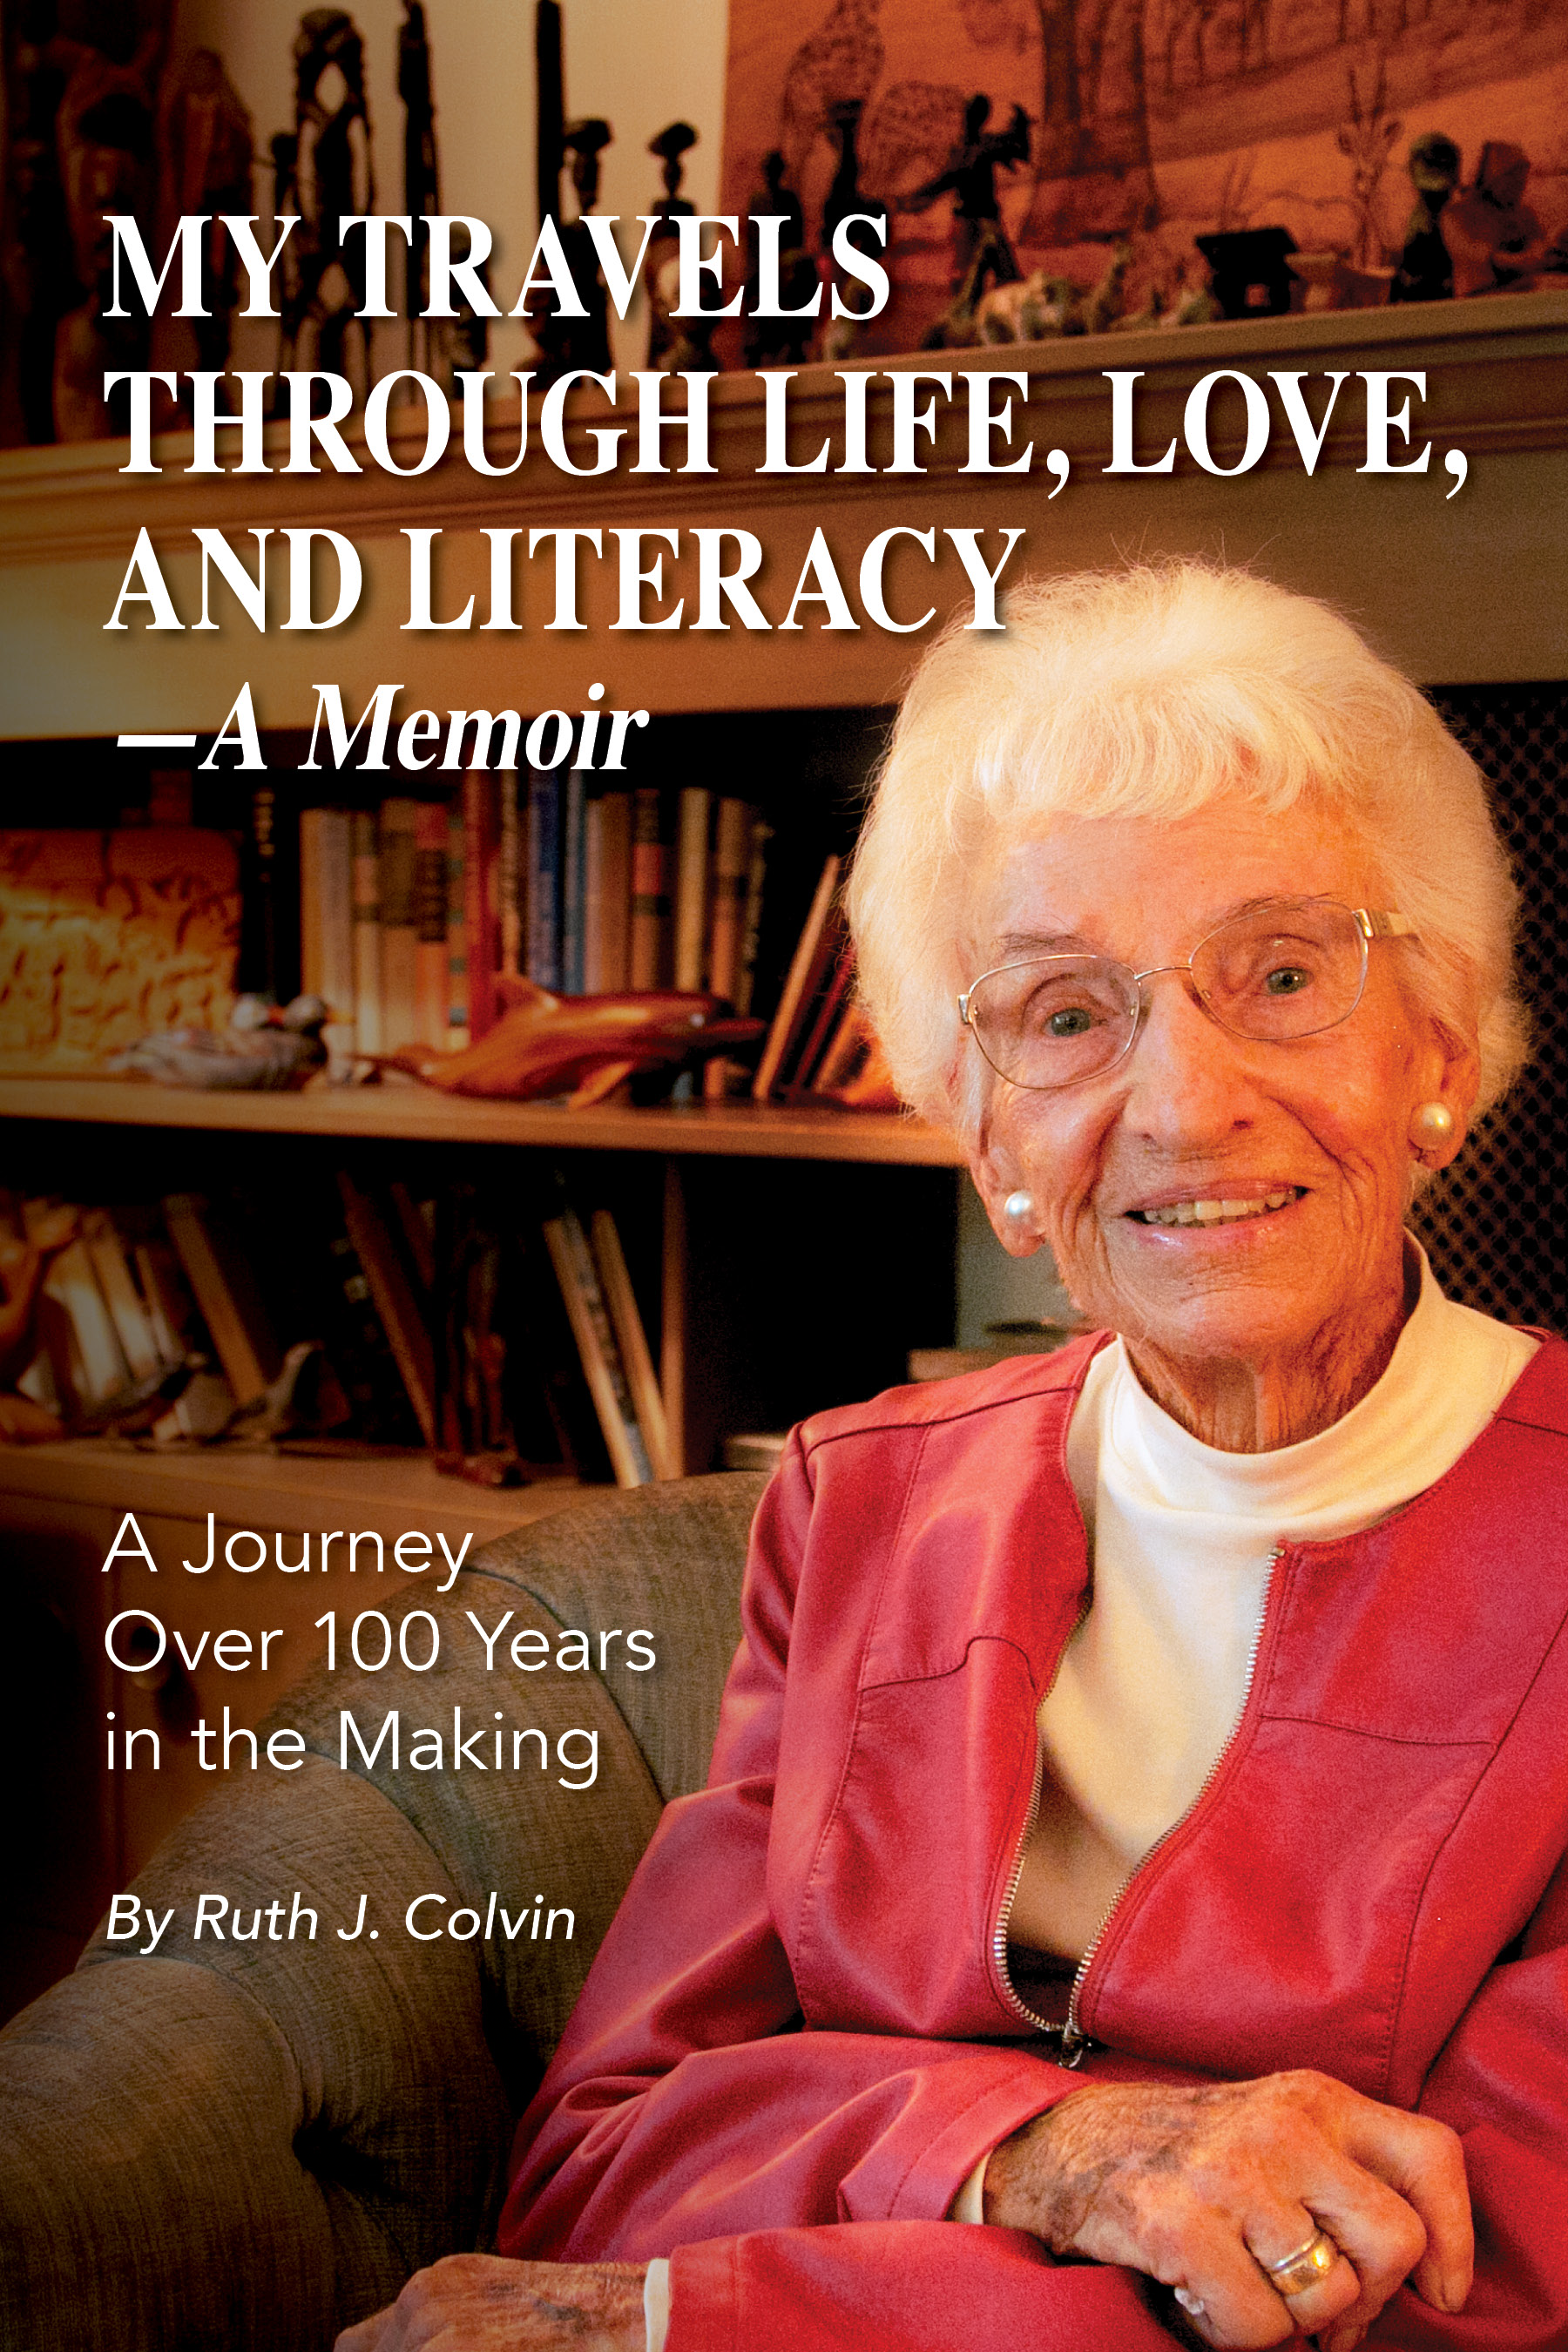 My Travels Through Life, Love, and Literacy – A Memoir, by Ruth J. Colvin